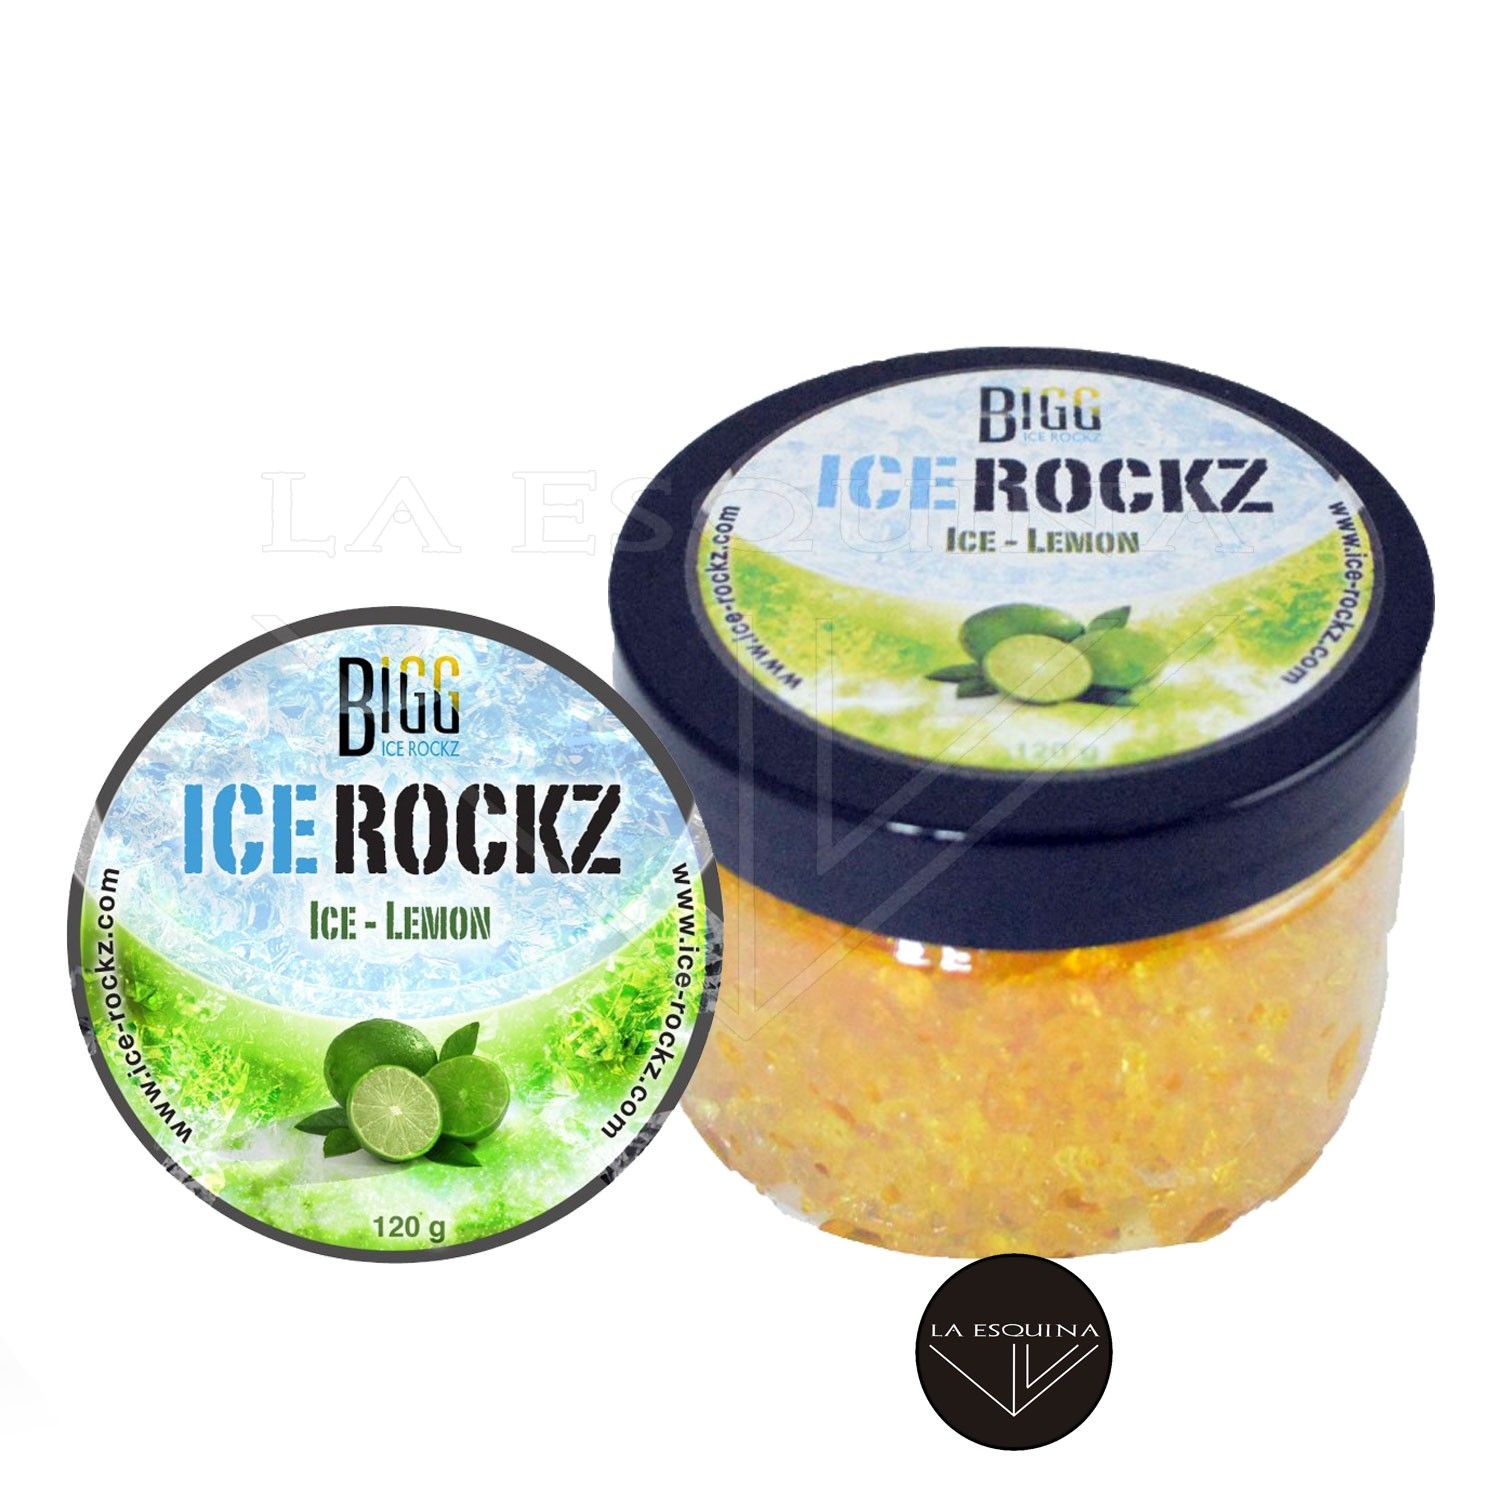 Gel Rock de Cachimba BIGG ICE ROCKZ – 120 g. – Ice-Lemon